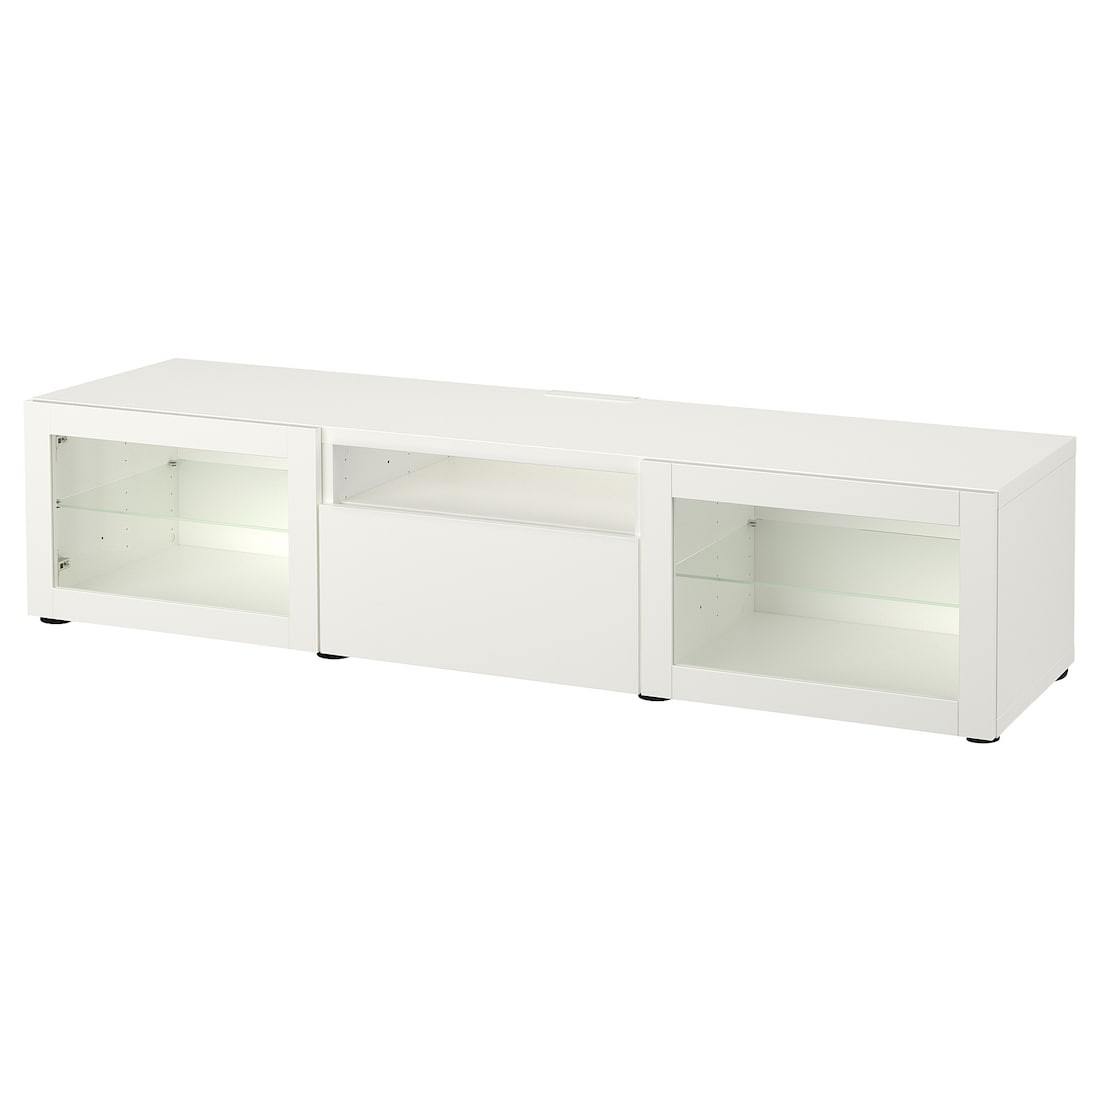 IKEA BESTÅ БЕСТО Тумба под ТВ, белый / Lappviken белое стекло прозрачное, 180x42x39 см 79329339 793.293.39